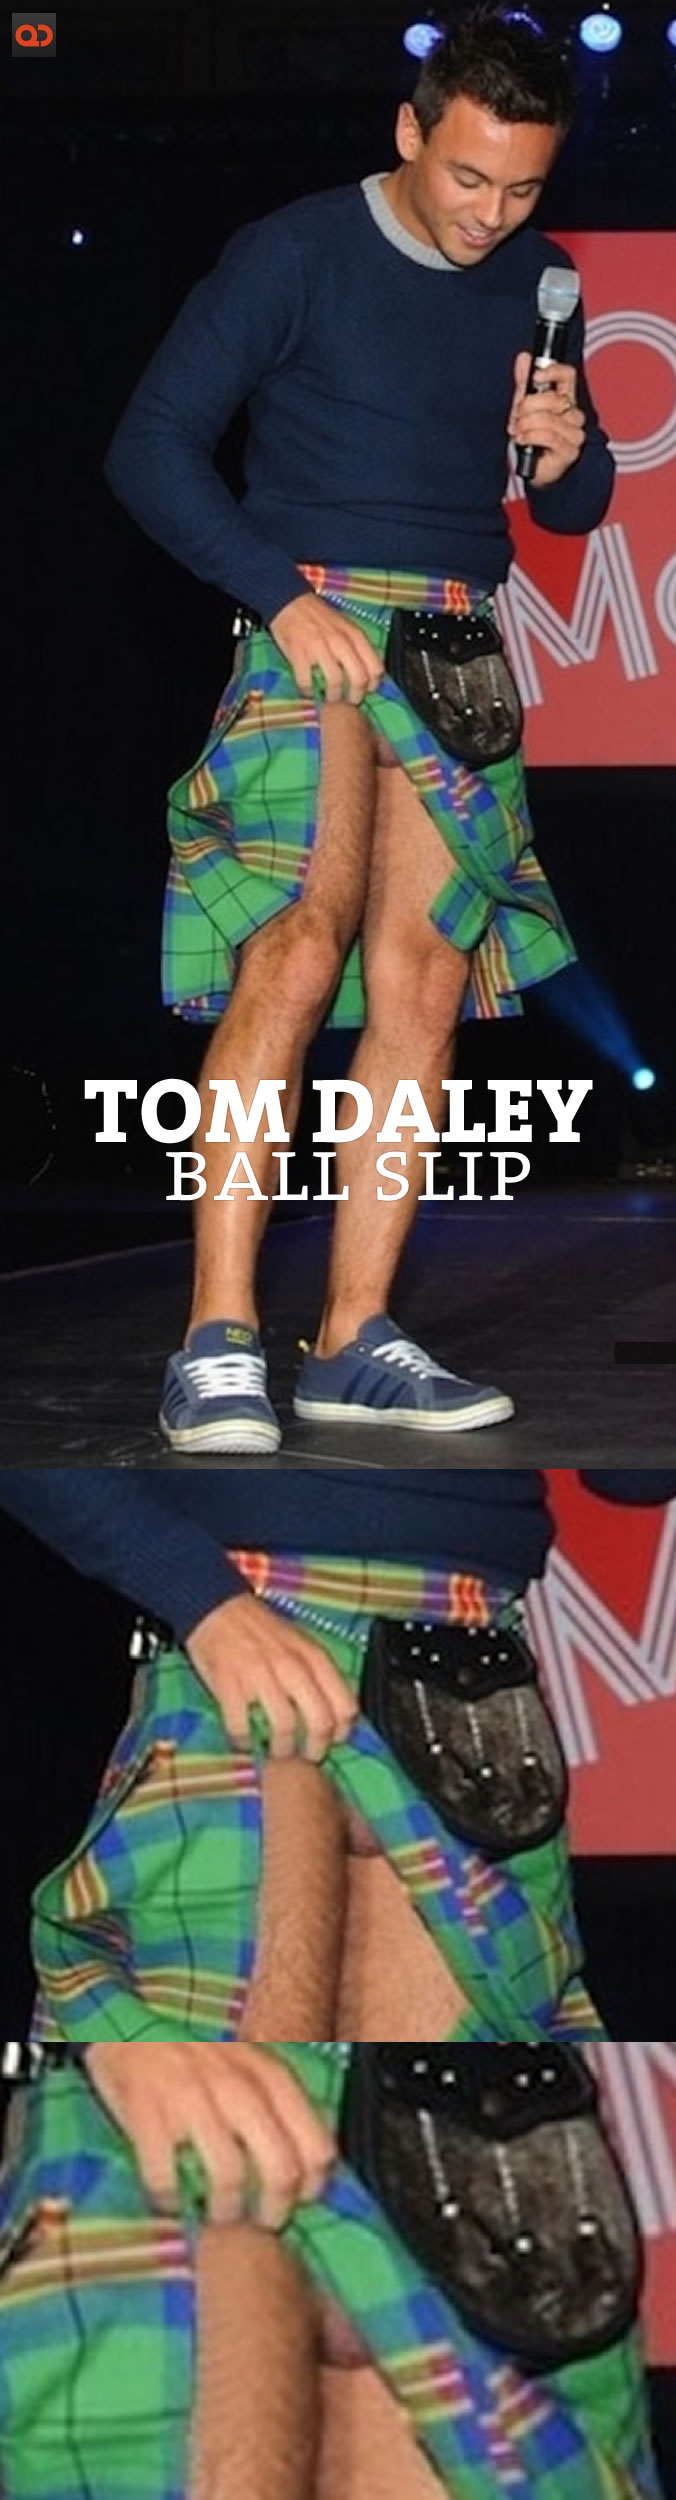 Tom Daley Ball Slip Closeup